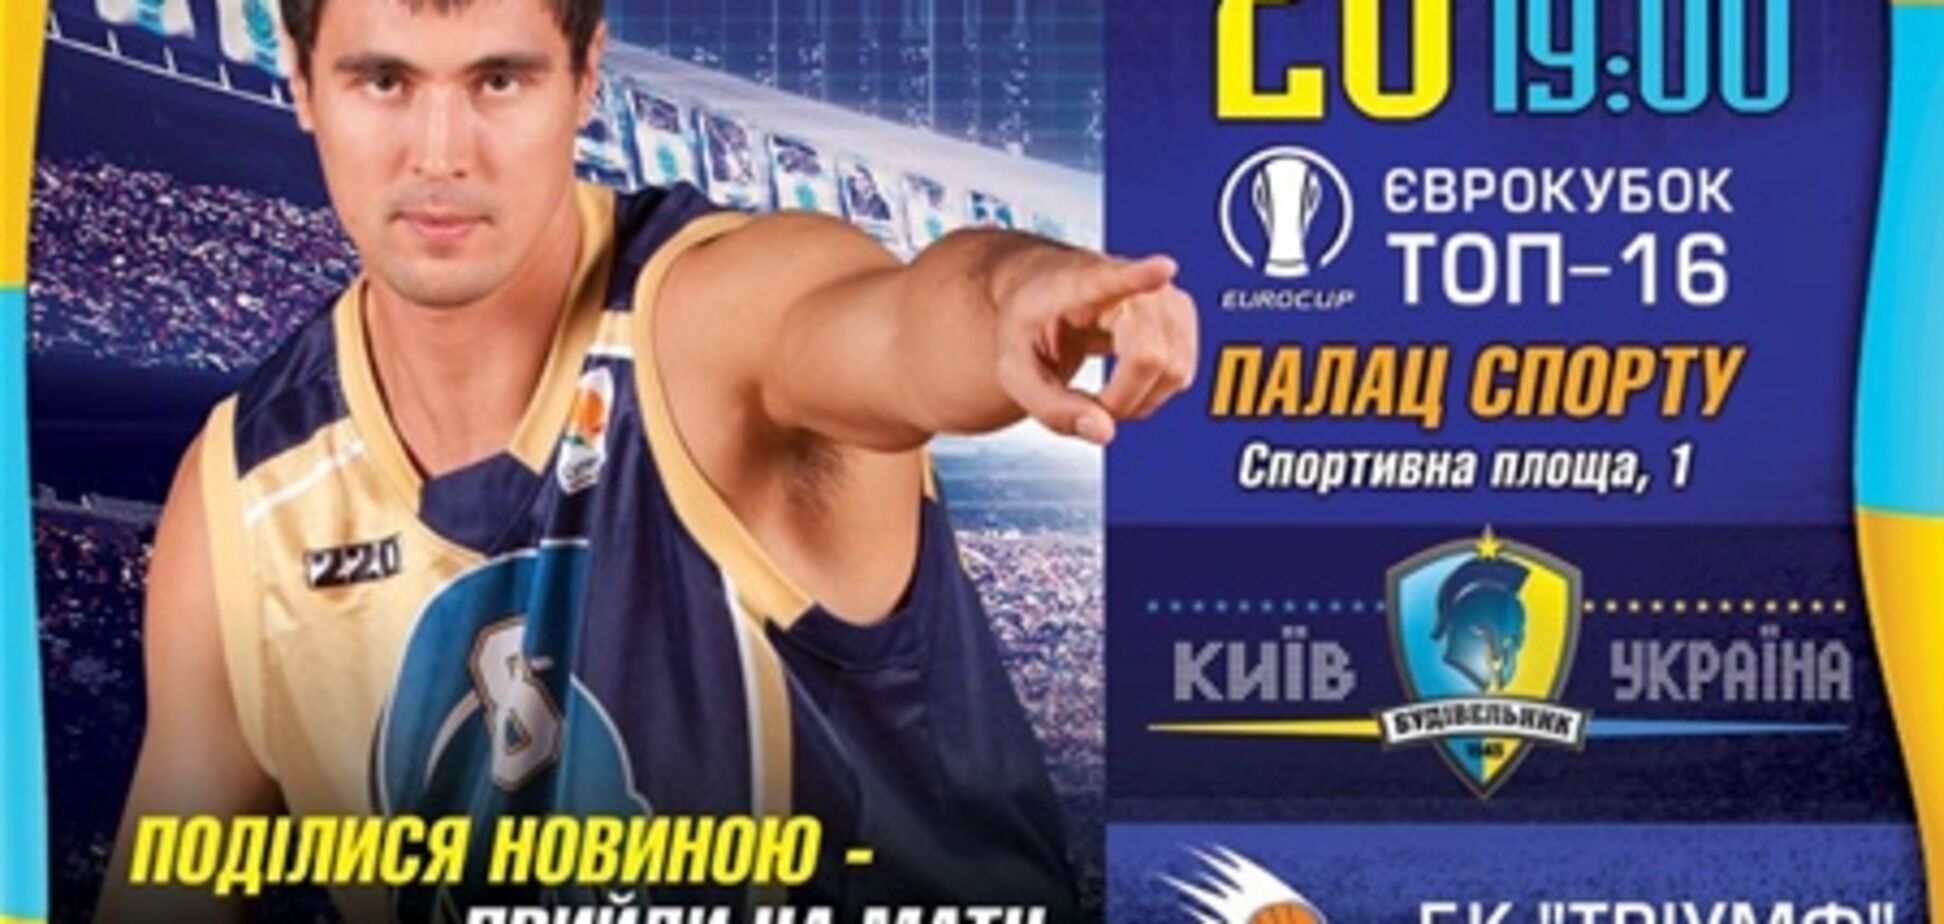 Еврокубок ТОП-16: Будивельник против российского Триумфа во Дворце Спорта